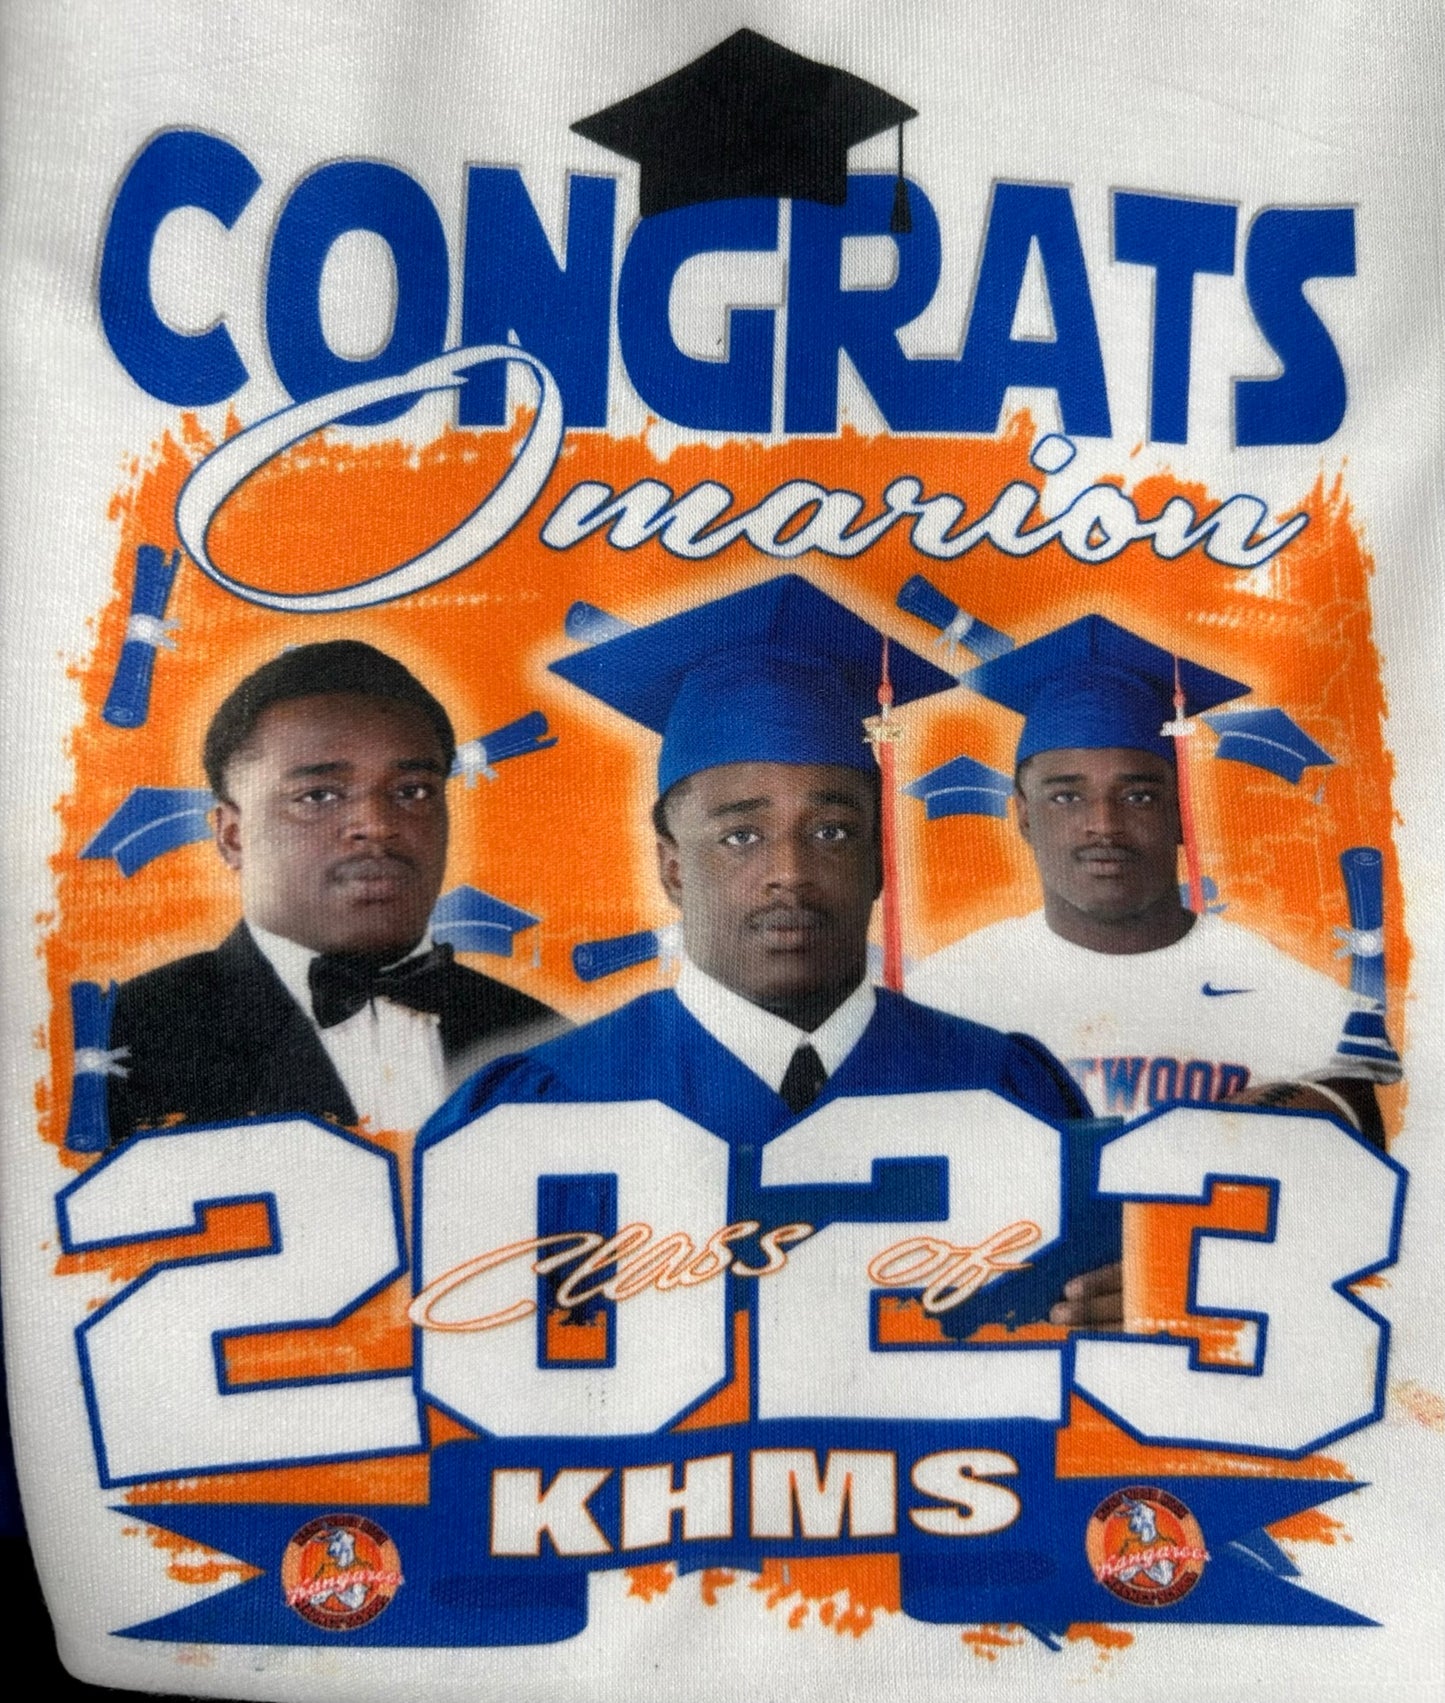 Custom Graduation Shirt